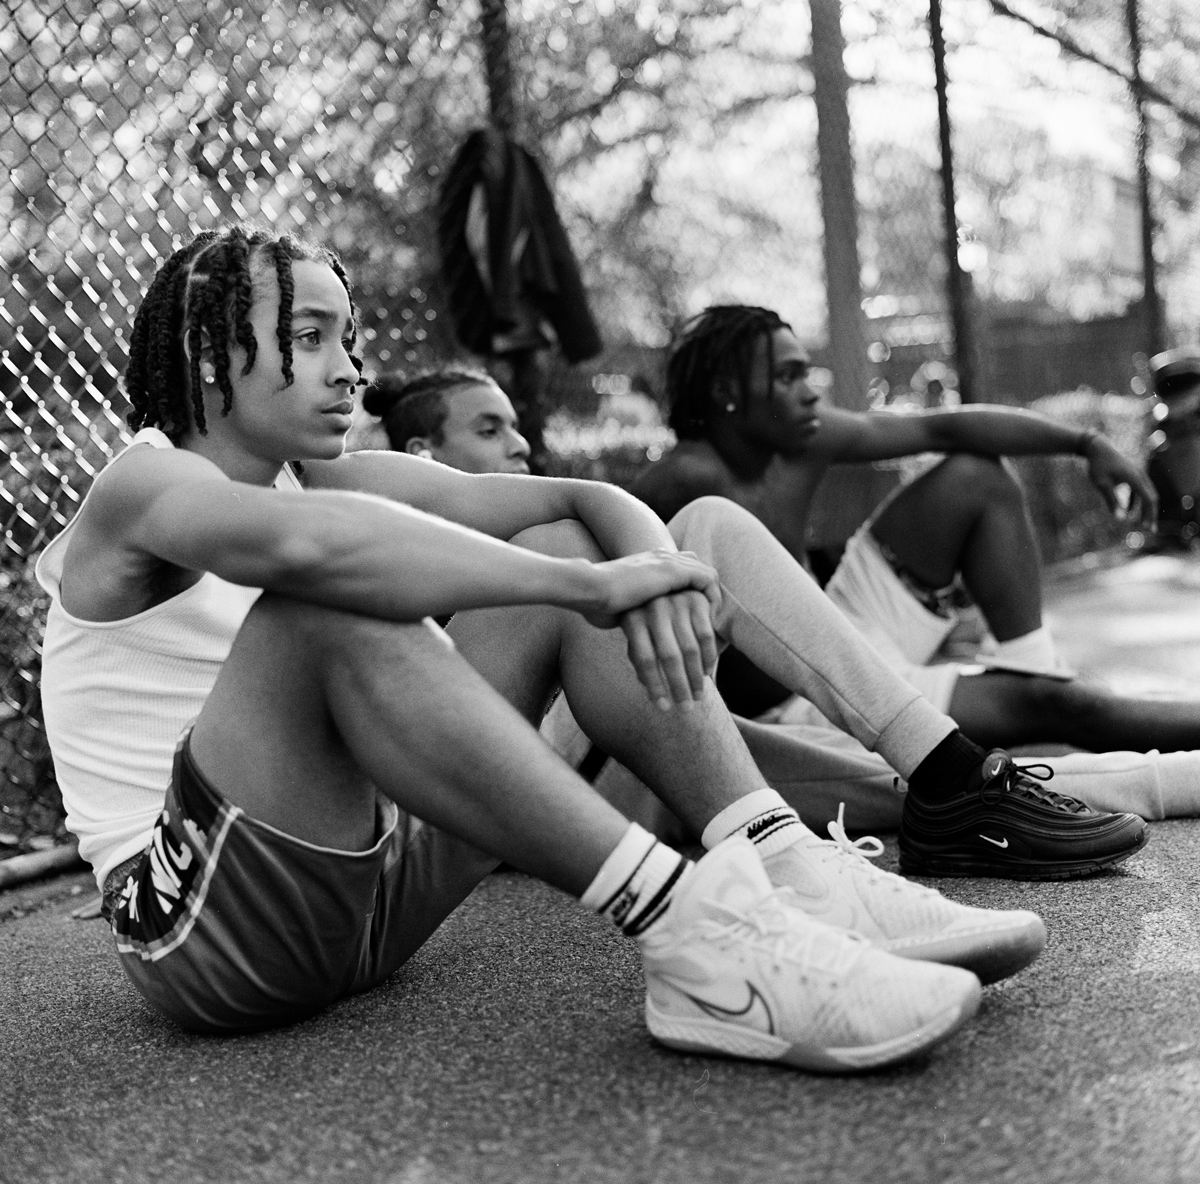 Men sat down on the basketball court